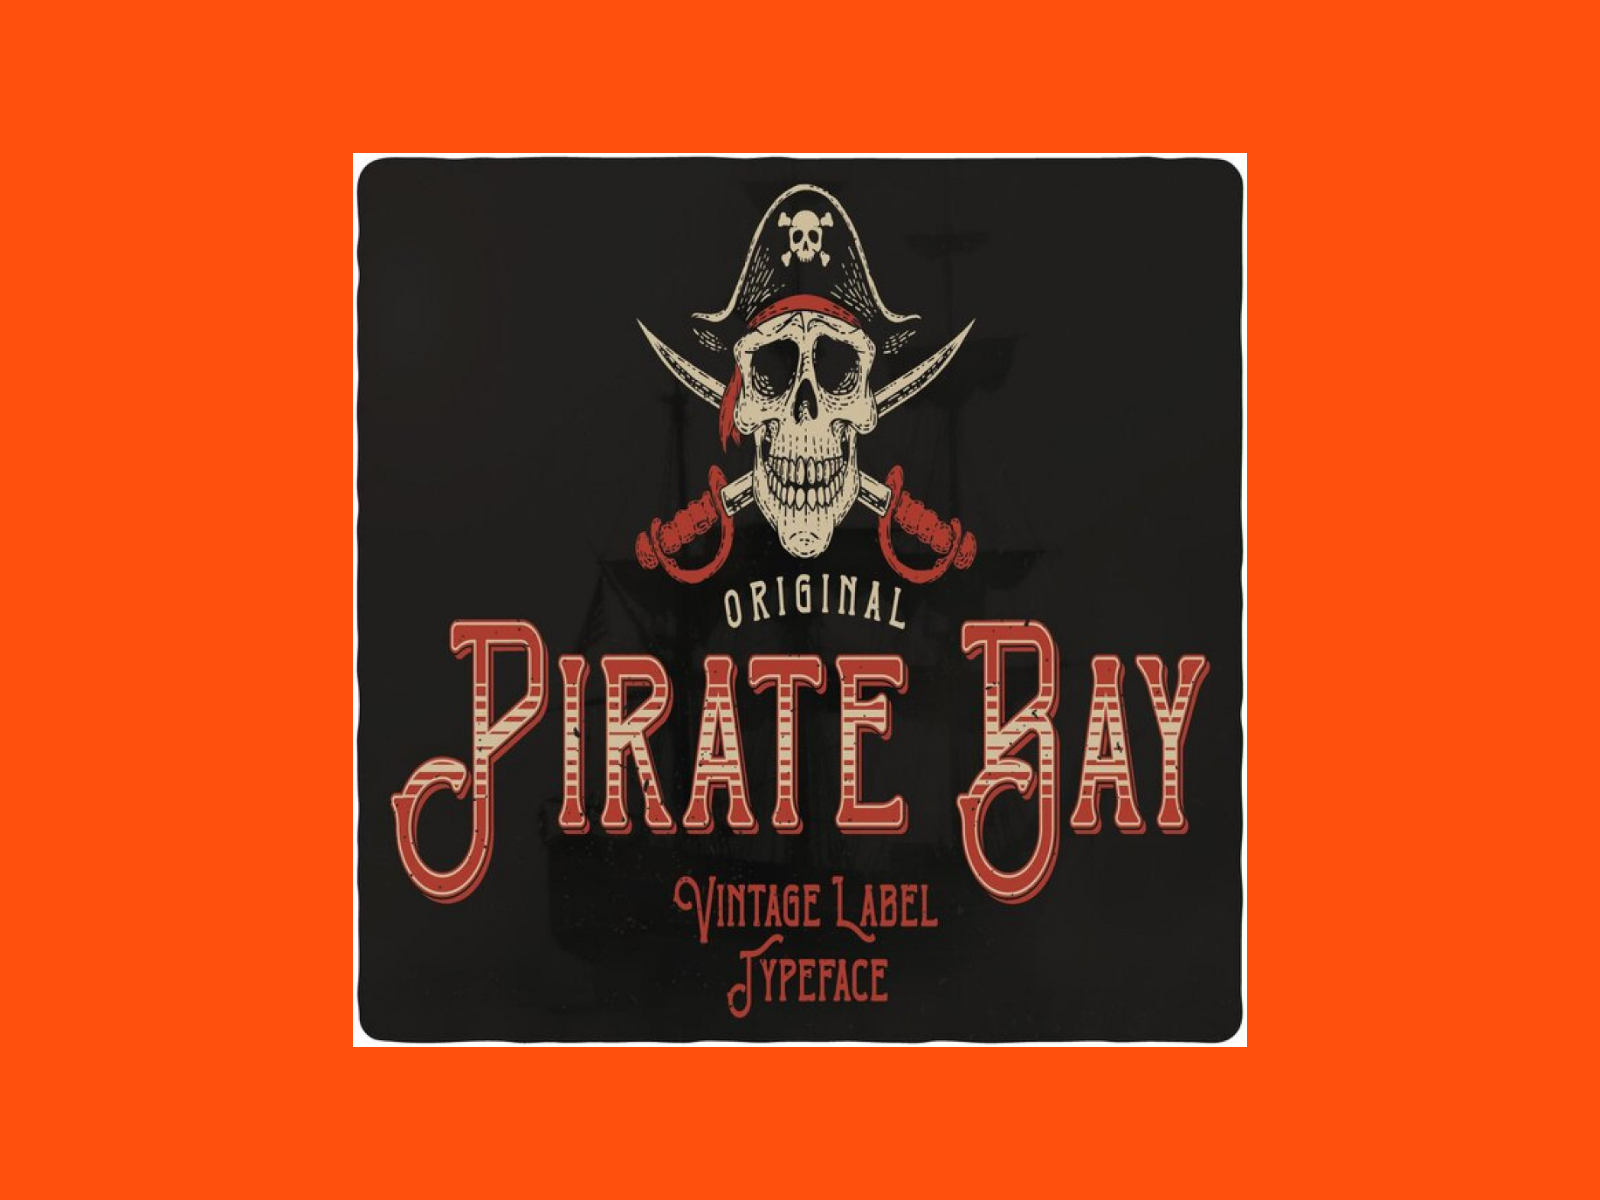 pirate bay font